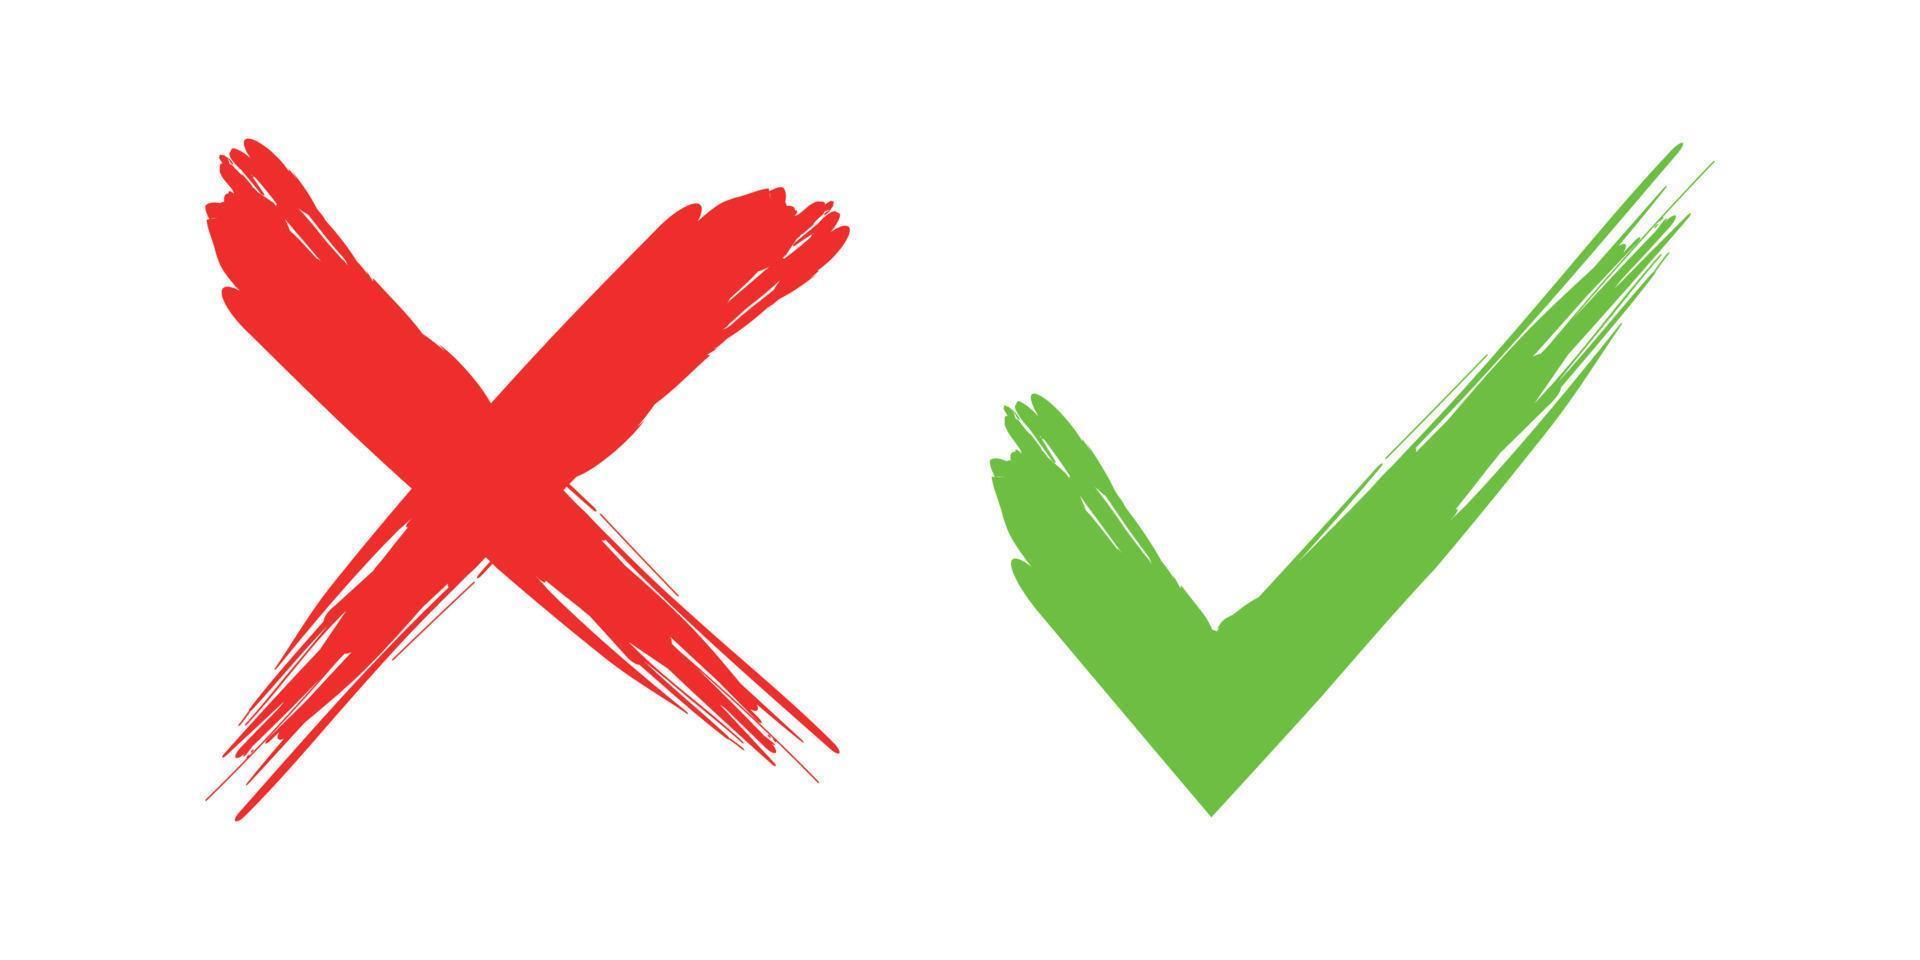 kwast groen vinkje en rood kruis pictogram symbool. vector